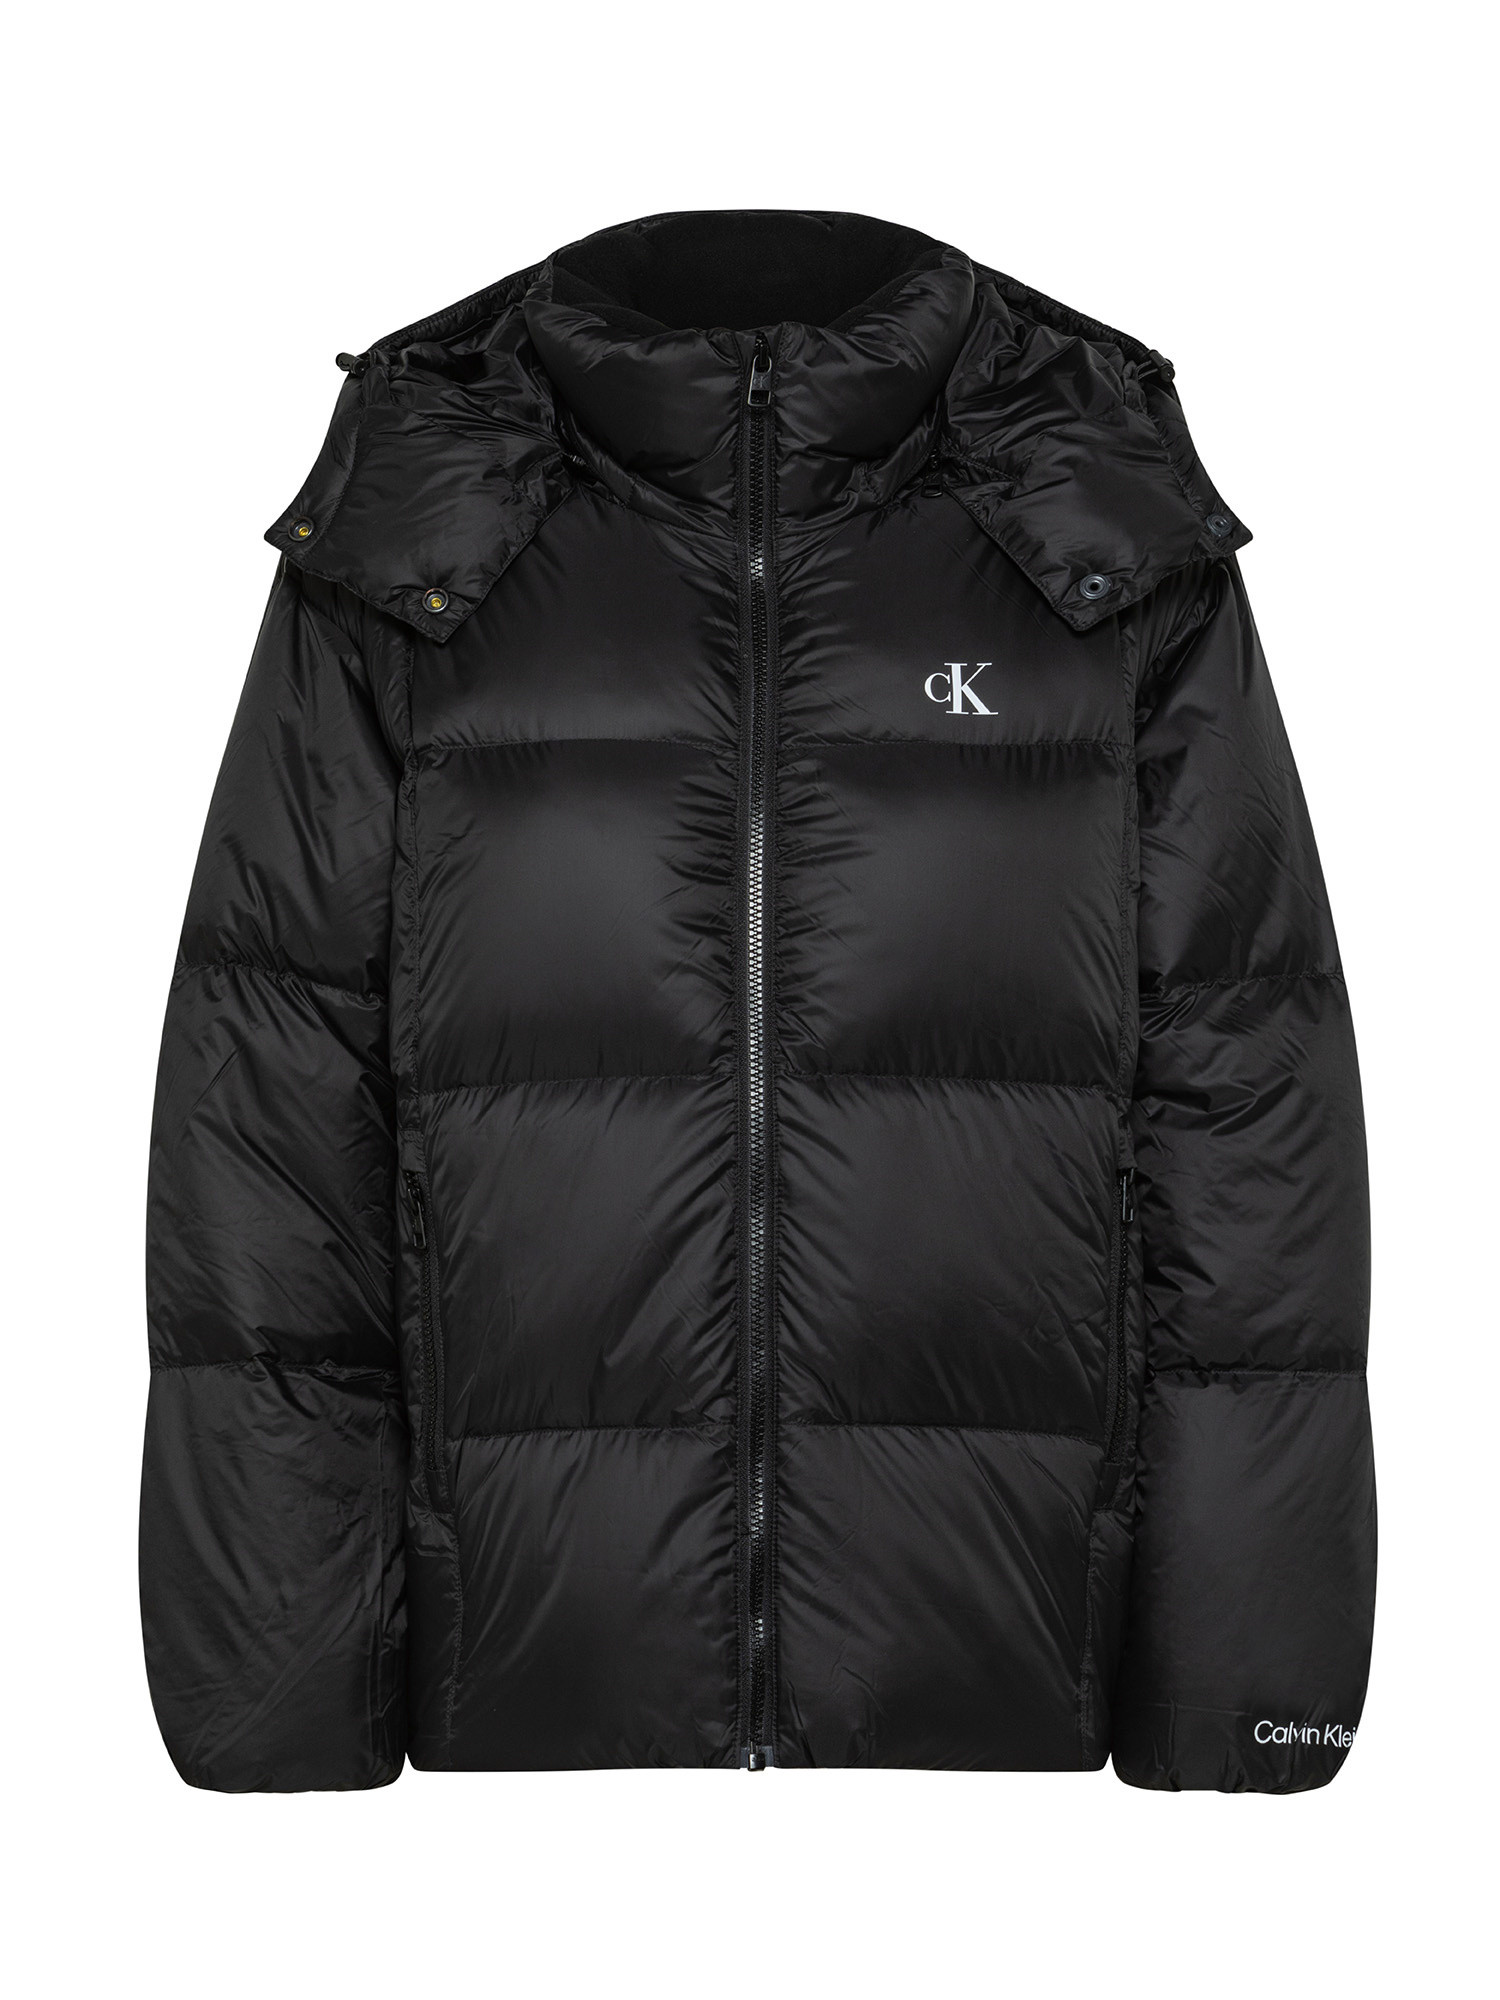 Calvin Klein Jeans - Down jacket with logo, Black, large image number 0